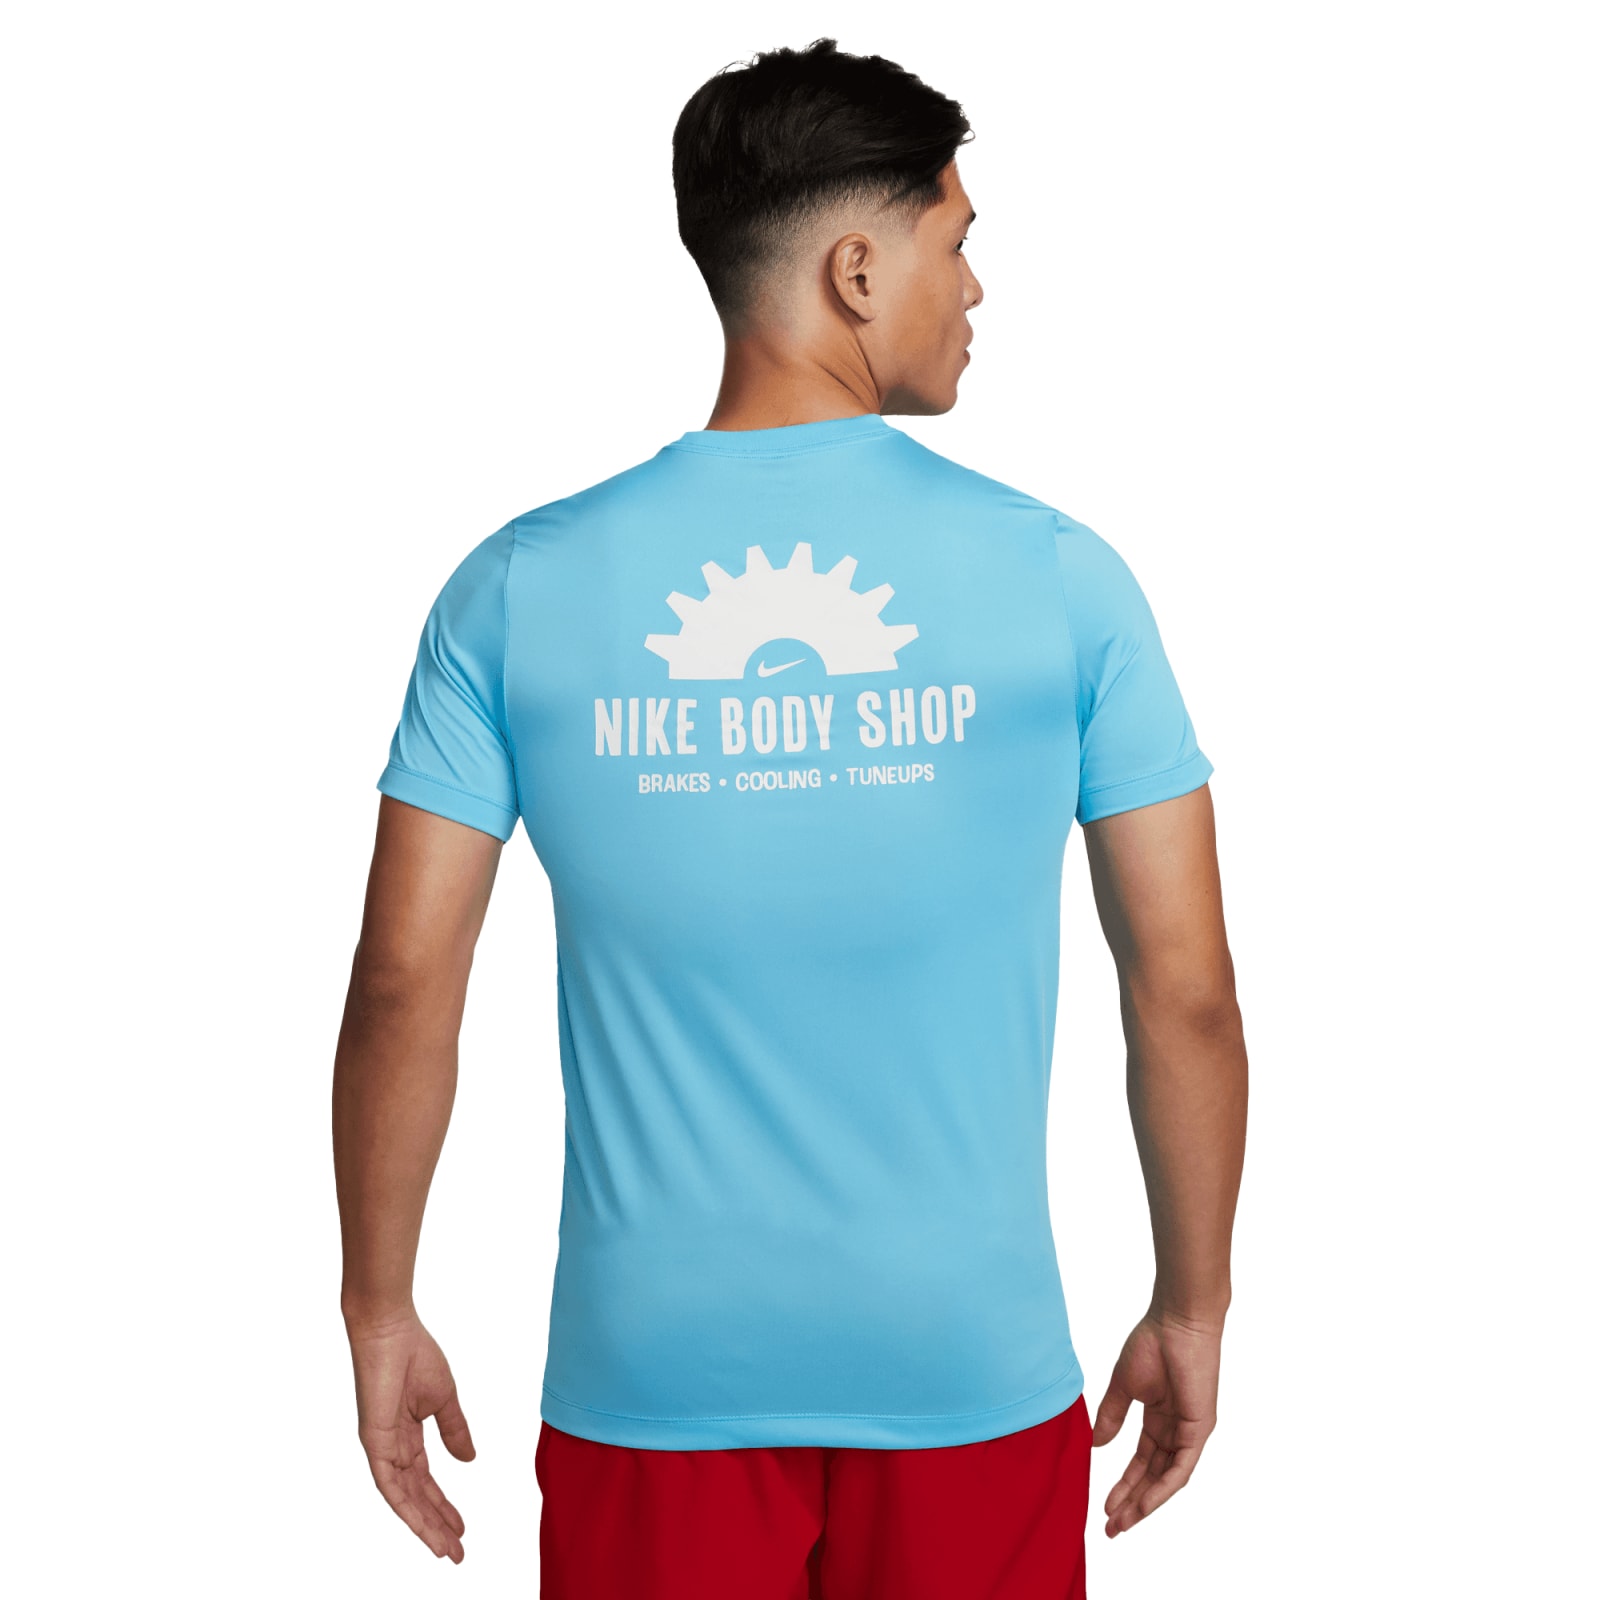 Nike Men's Dri-FIT “Body Shop” Men's T-Shirt - Baltic Blue